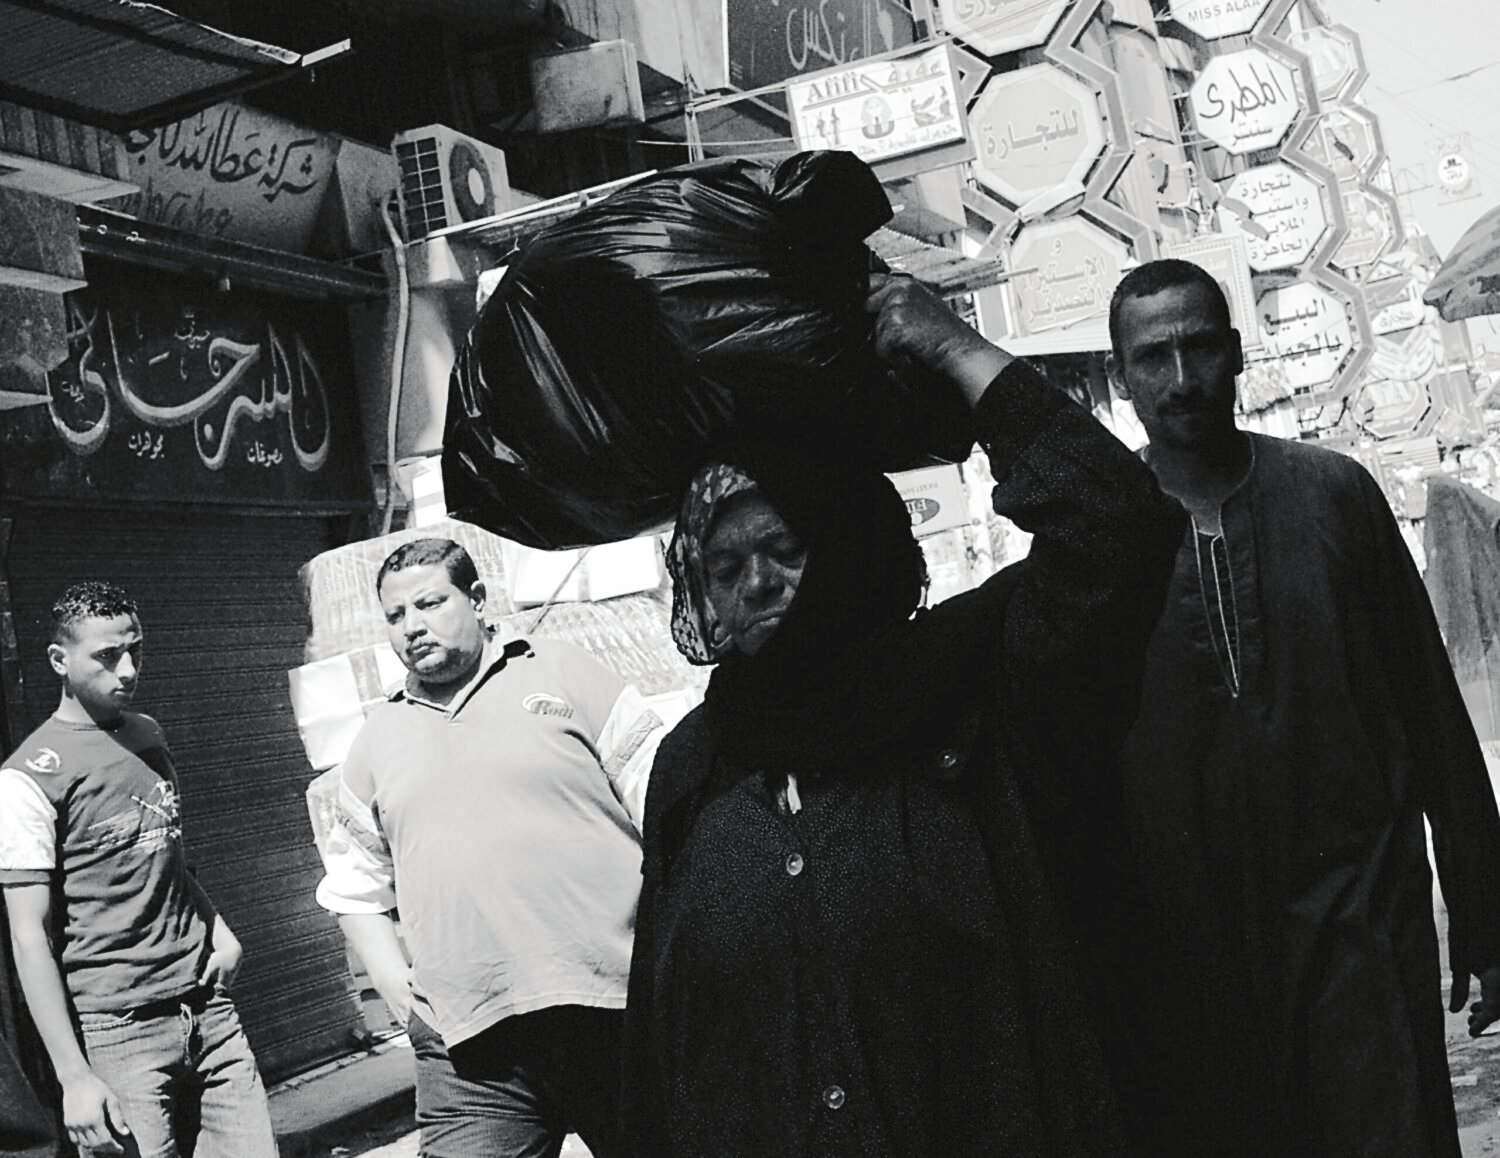 Cairo street and documentary